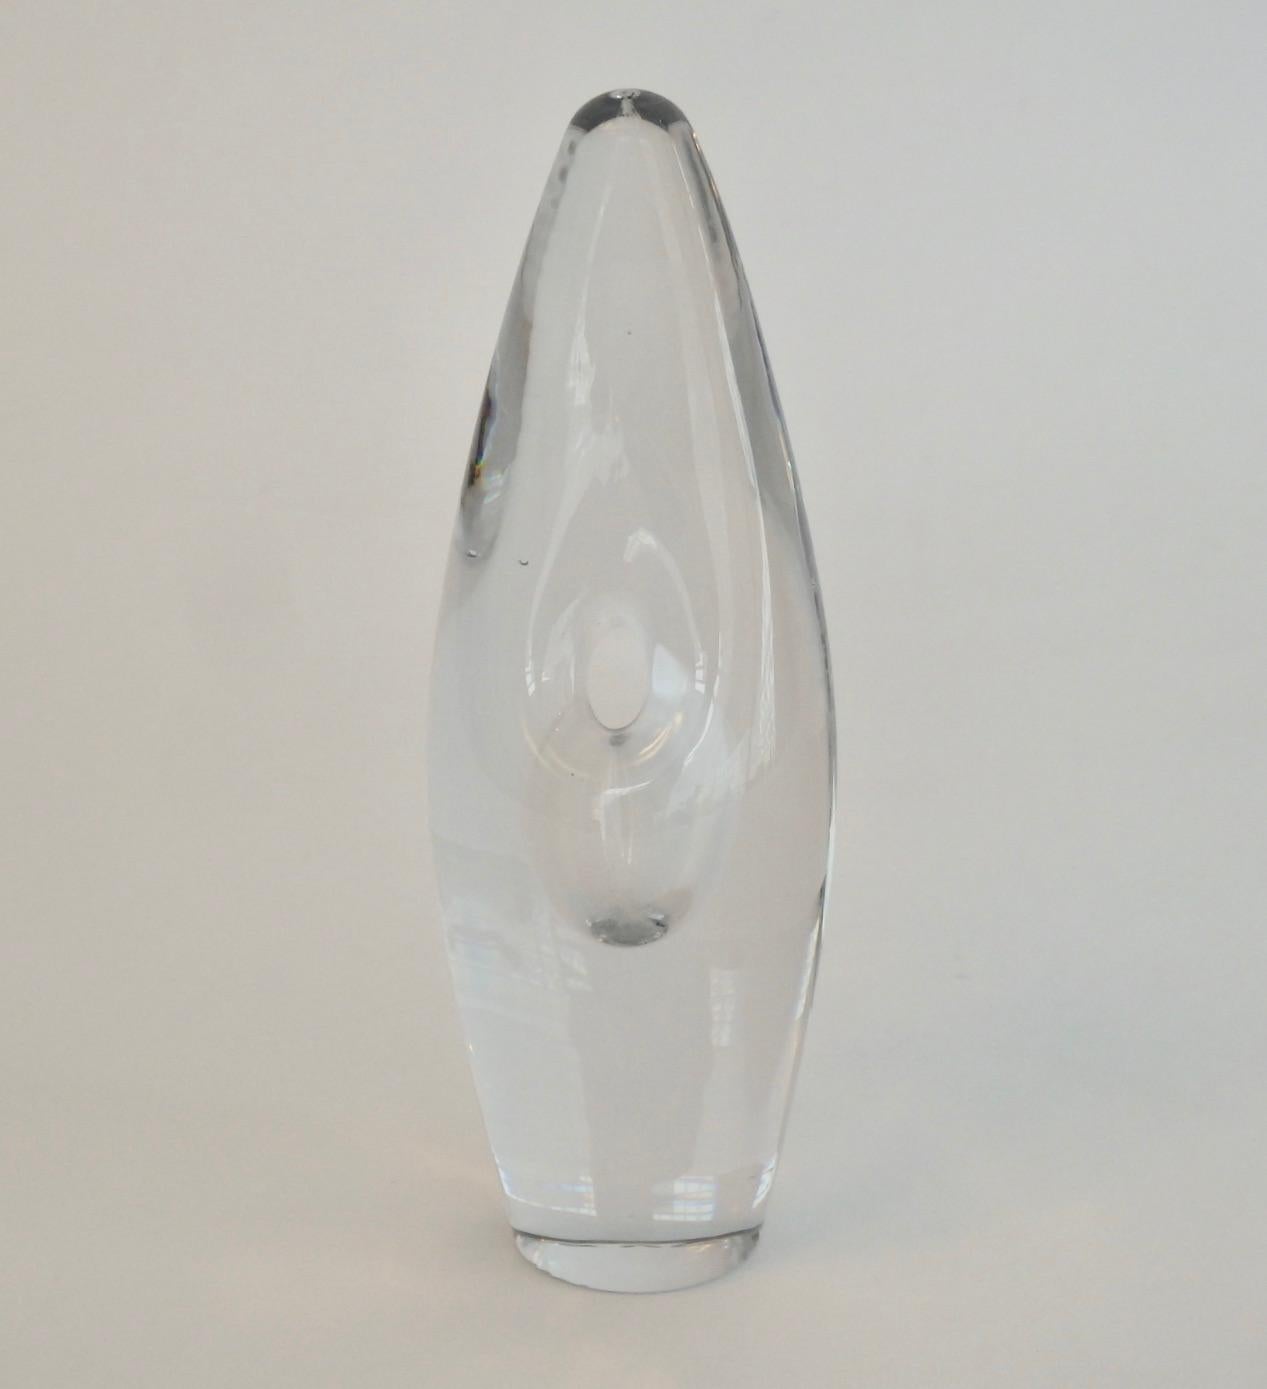 Littala glass bud vase by Timo Sarpeneva. Signed on underside.